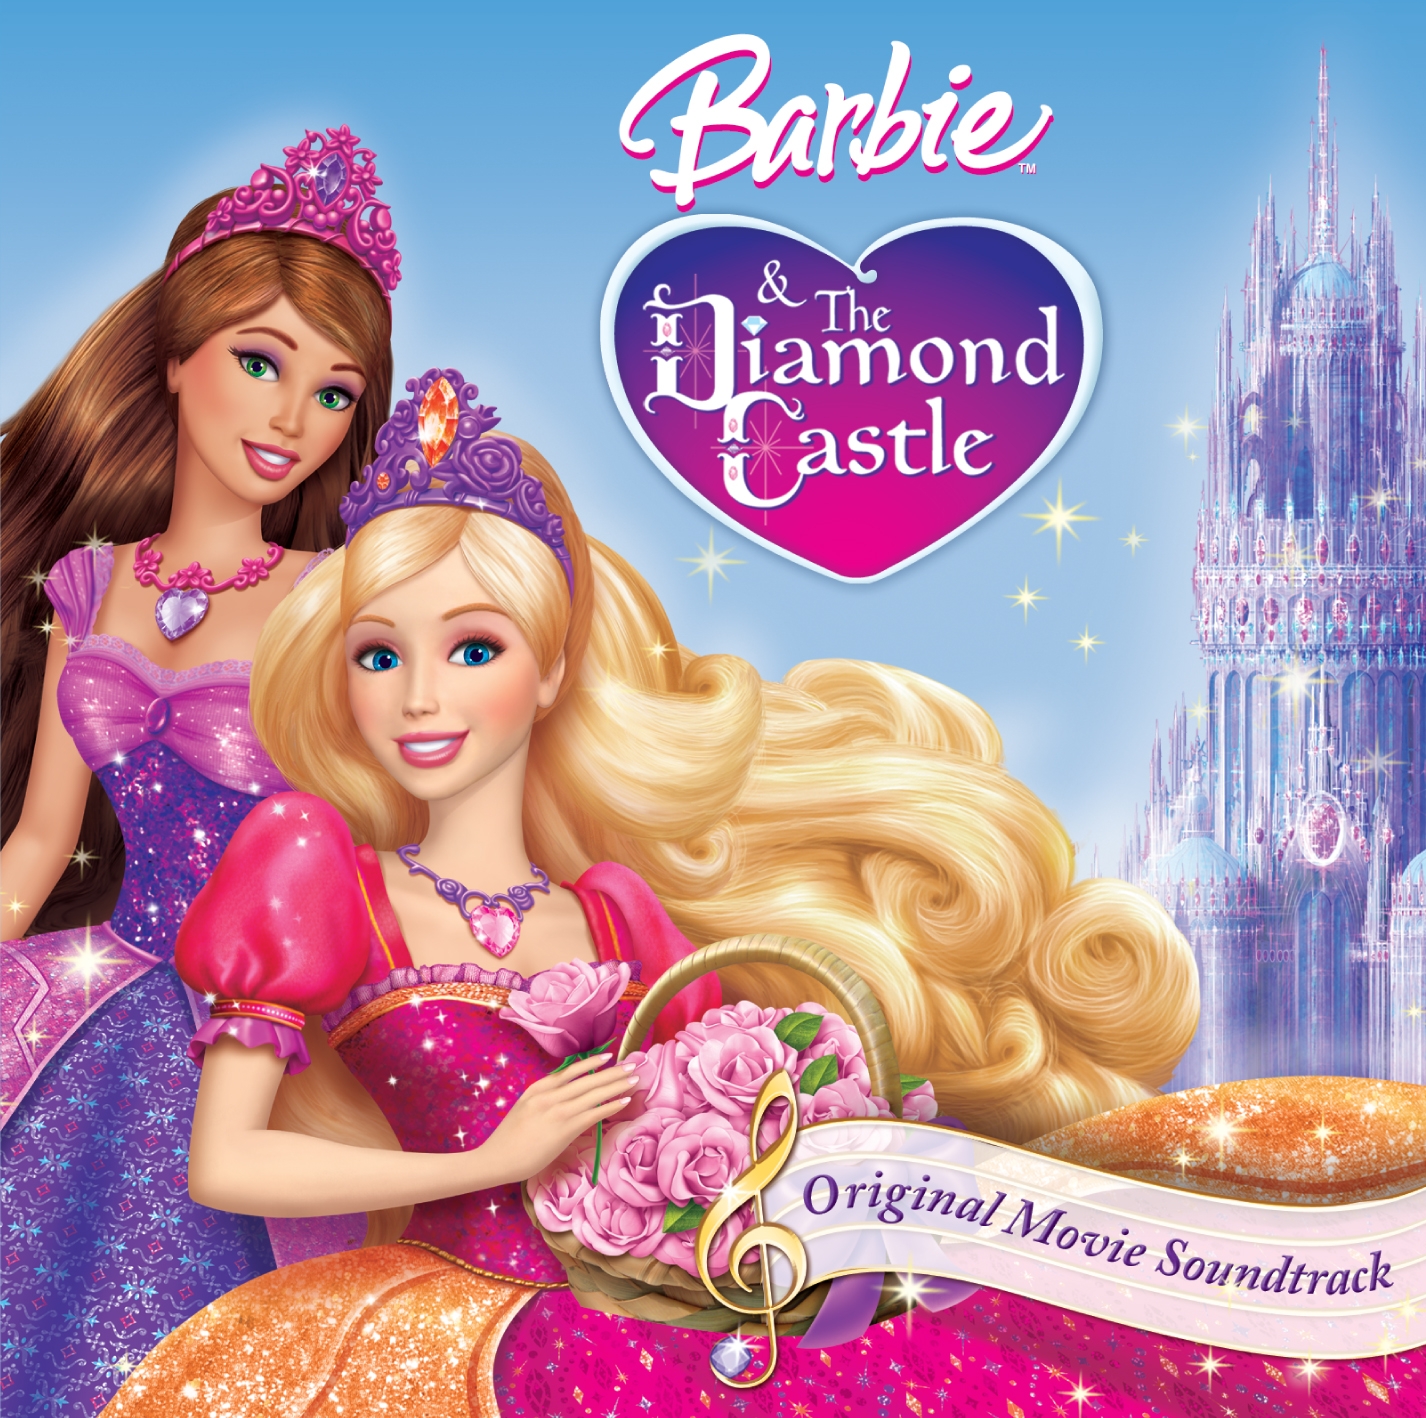 barbie princess and the pauper free lyrics